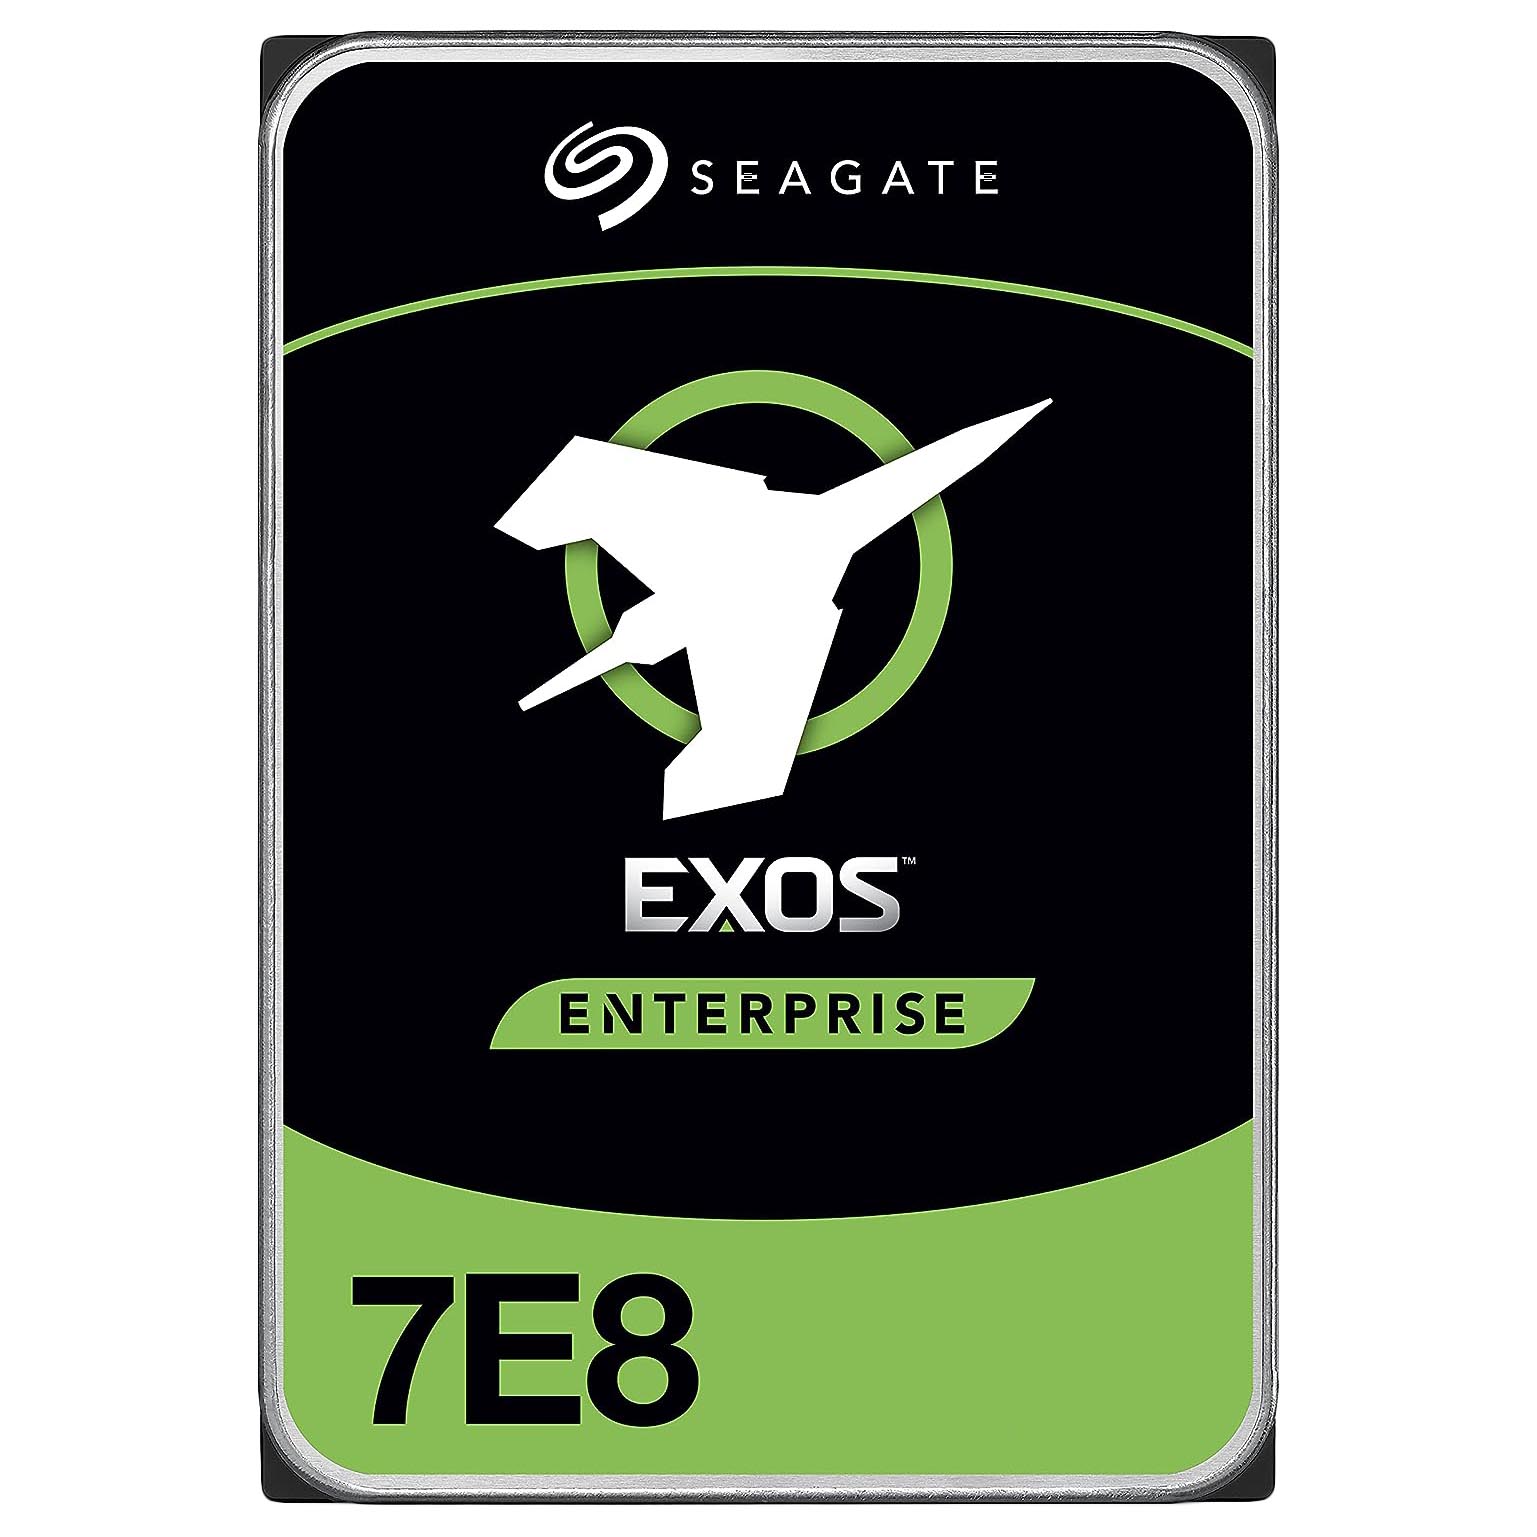 цена Внутренний жесткий диск Seagate Exos 7E8 512E, ST4000NM0125, 4 Тб